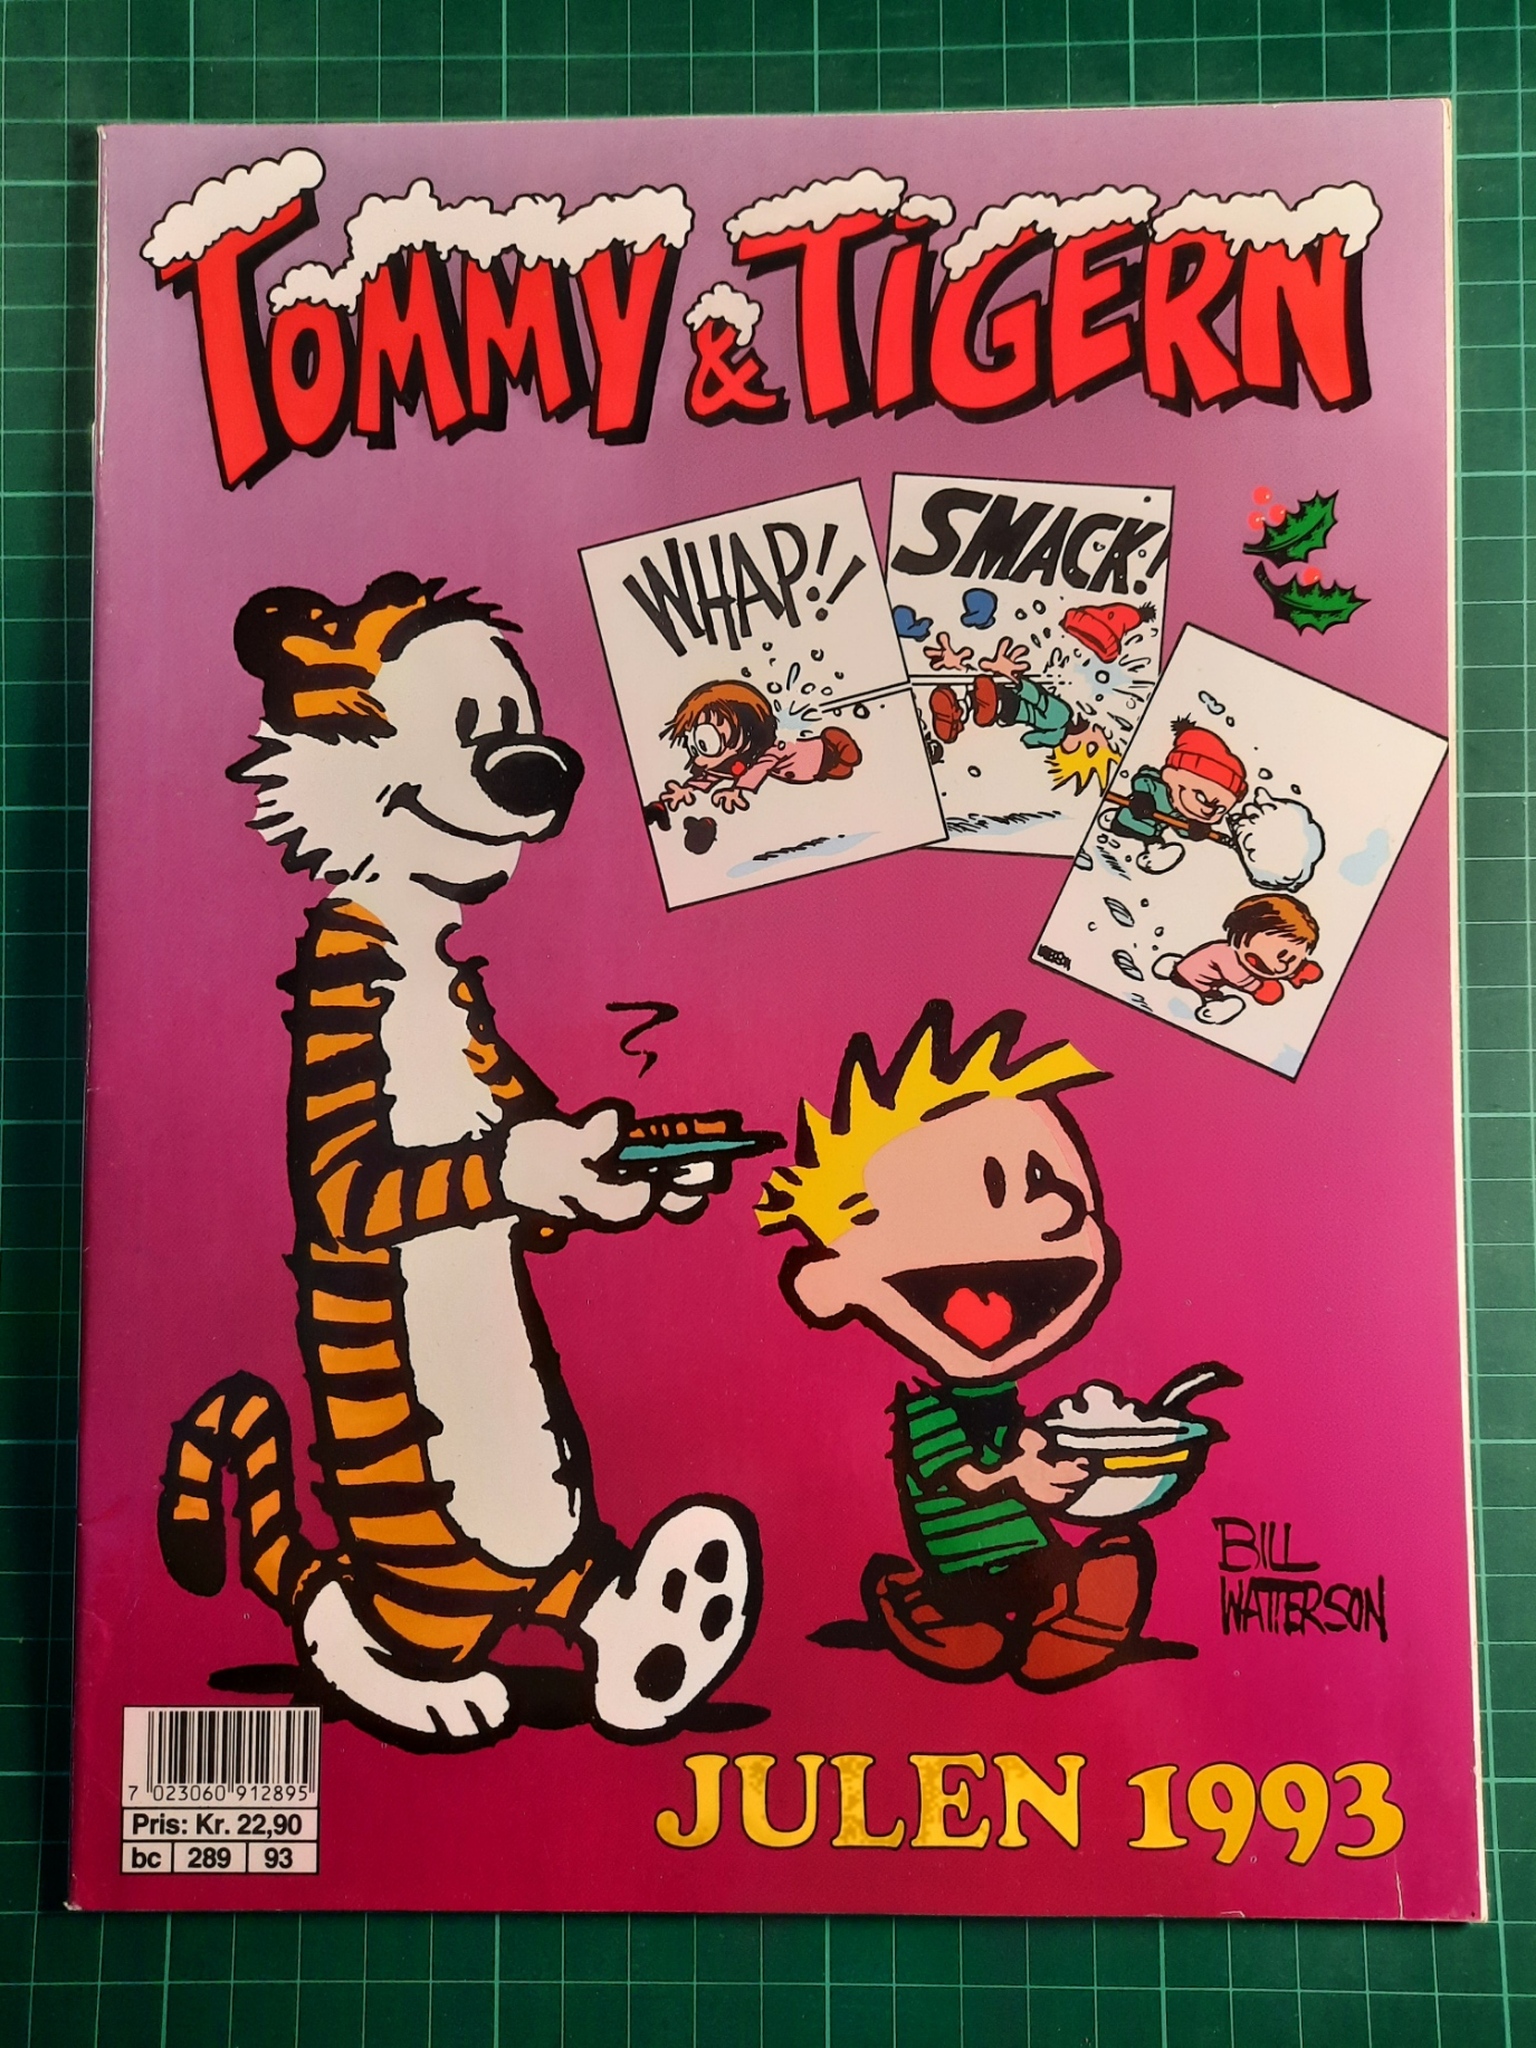 Tommy & Tigern julen 1993